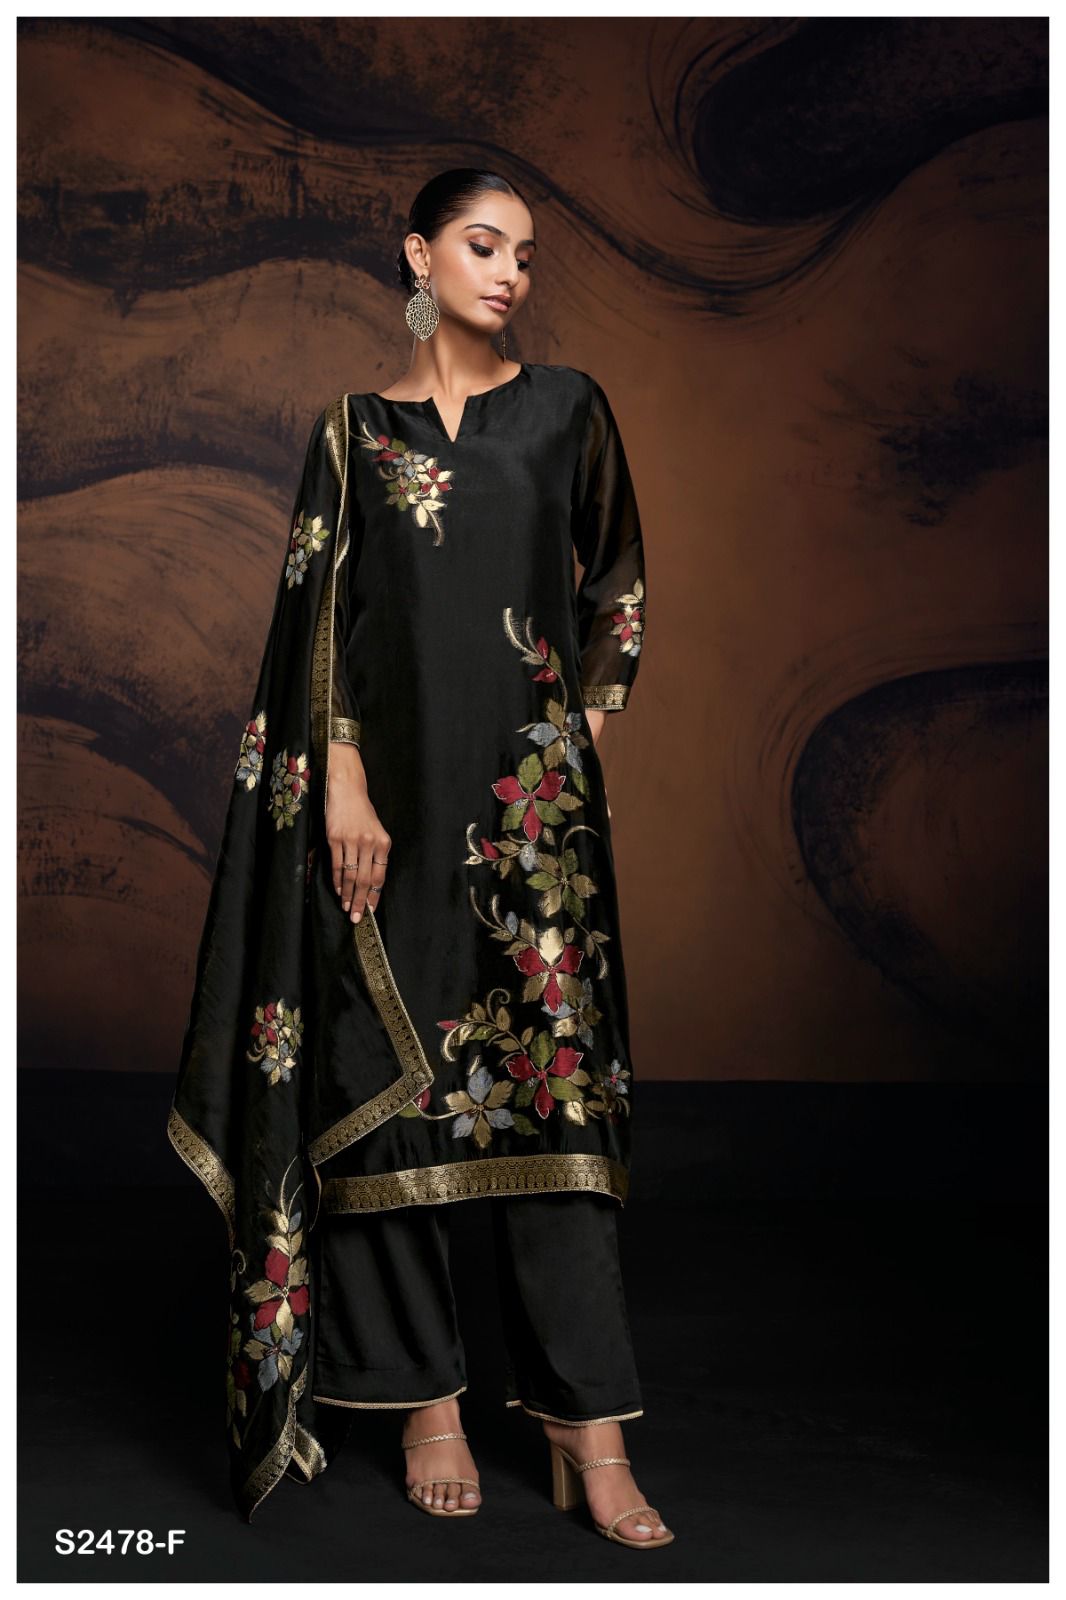 Evania 2478 Ganga Woven Silk Plazzo Style Suits Exporter India